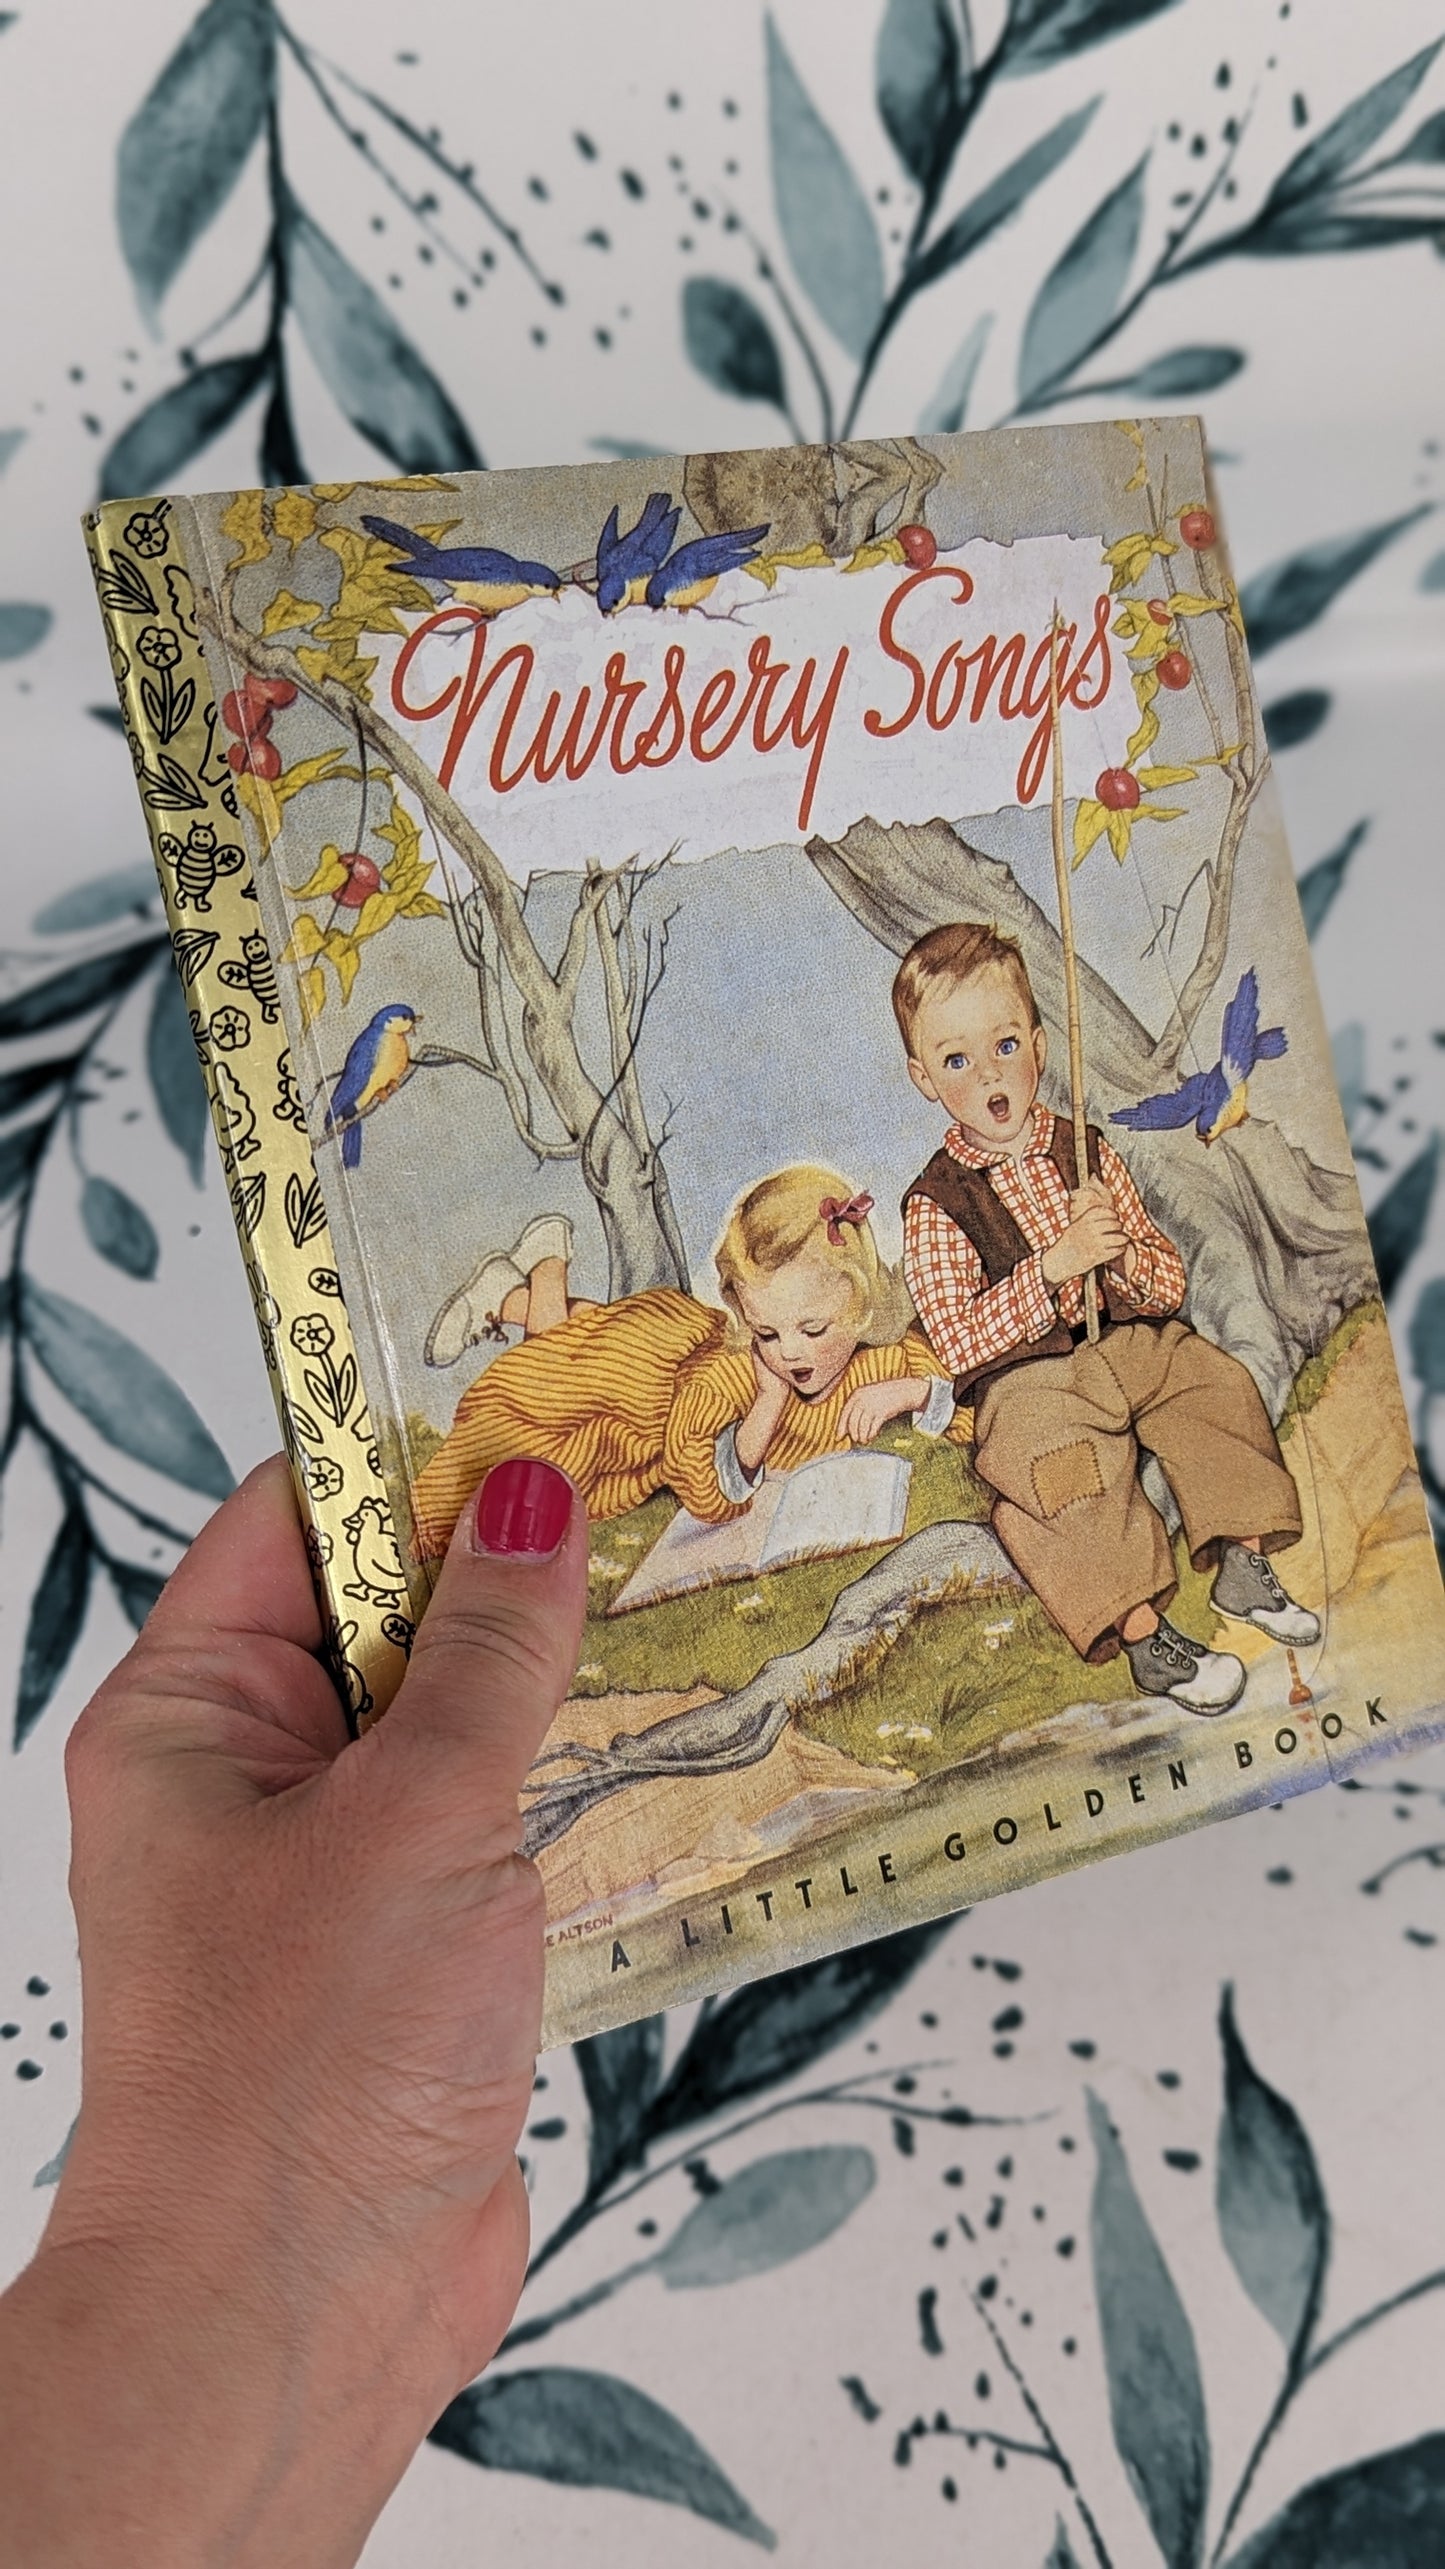 Little Golden Book: Nursery Songs